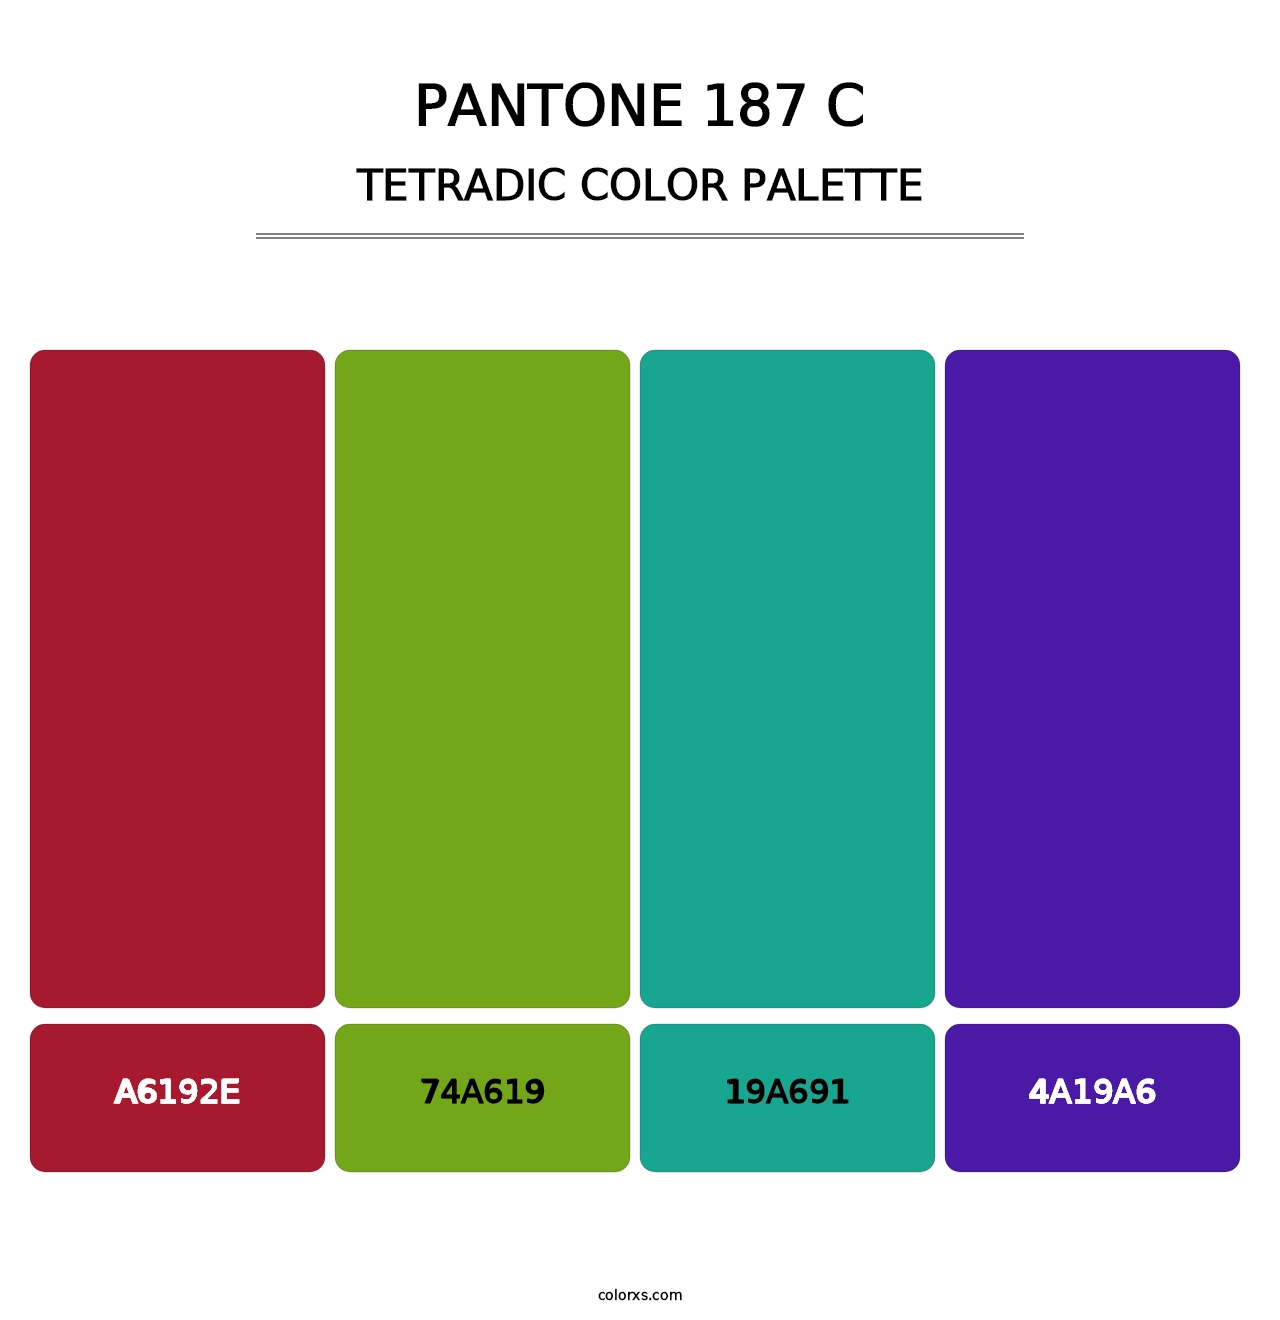 PANTONE 187 C - Tetradic Color Palette